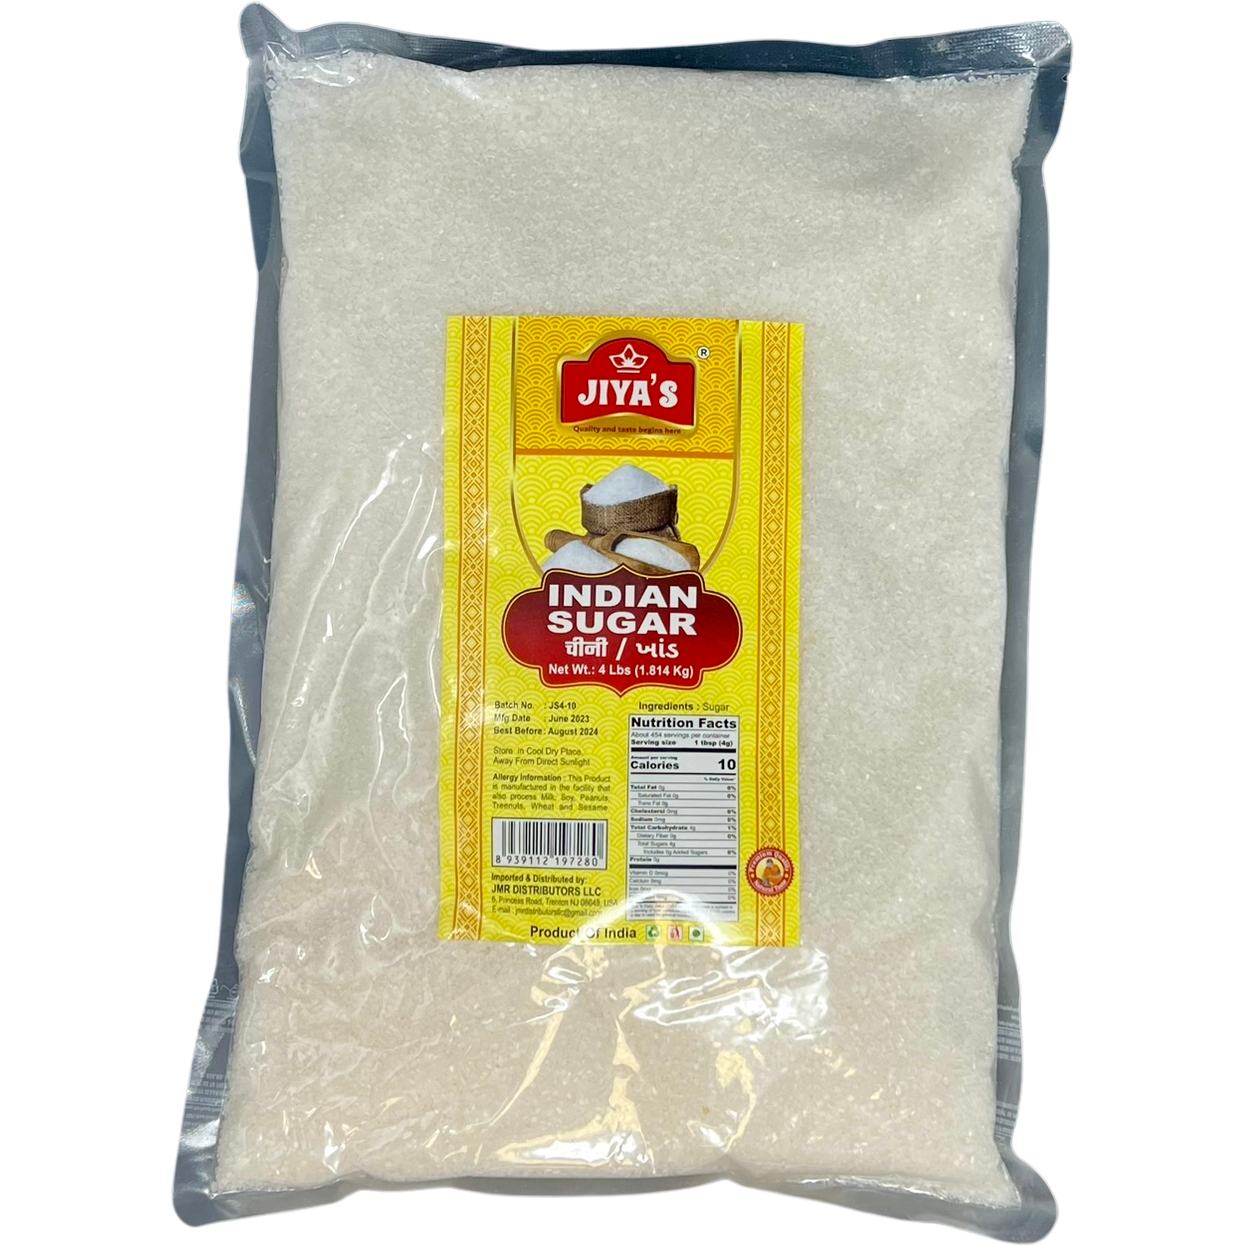 Jiya's Indian Sugar - 4 Lb (1.82 Kg)